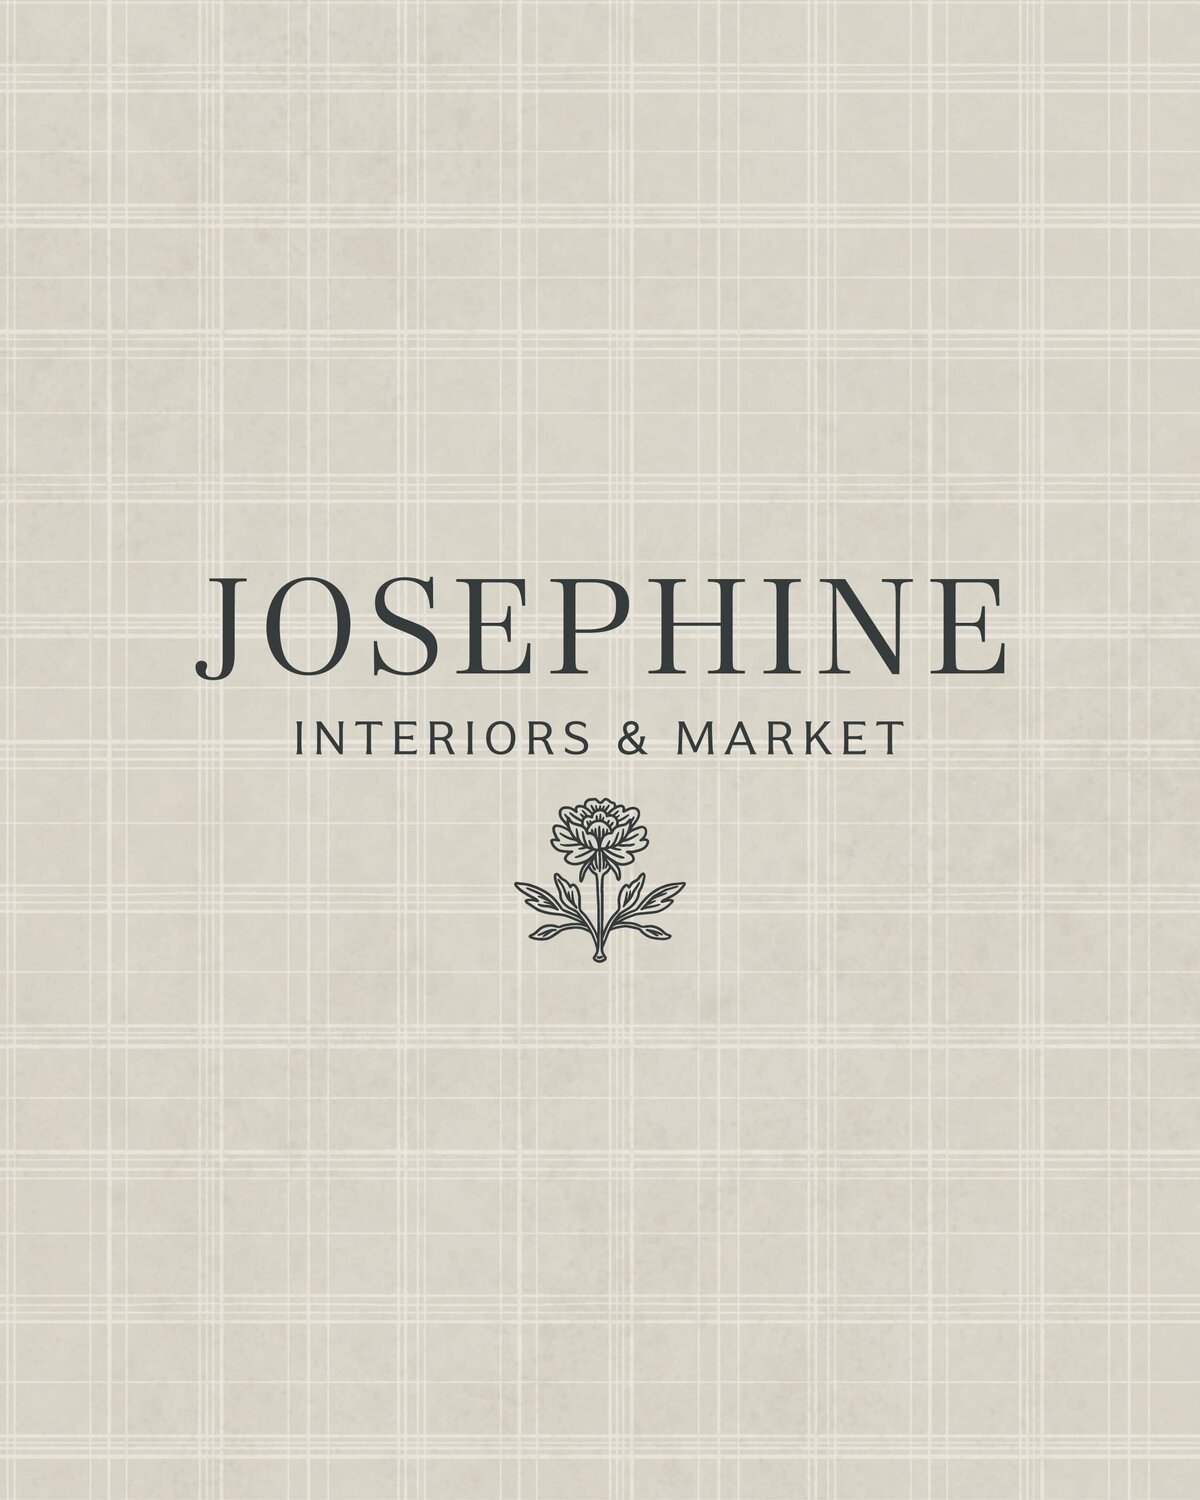 JosephineInteriors&Market_LaunchGraphics_Instagram8